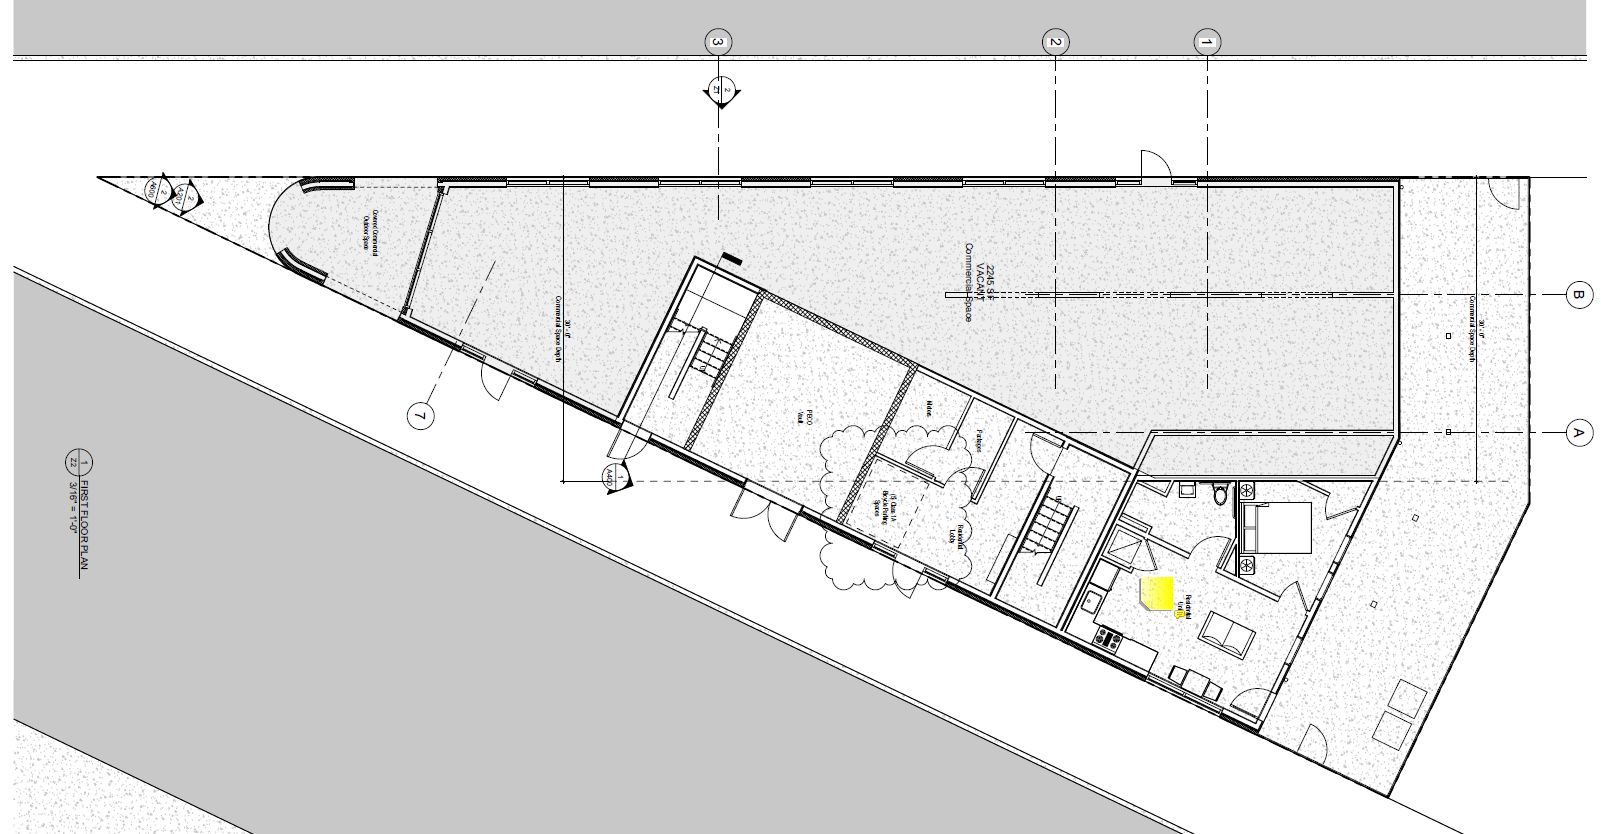 2401 Frankford Avenue. Ground floor plan. Credit: Ambit Architecture via the City of Philadelphia